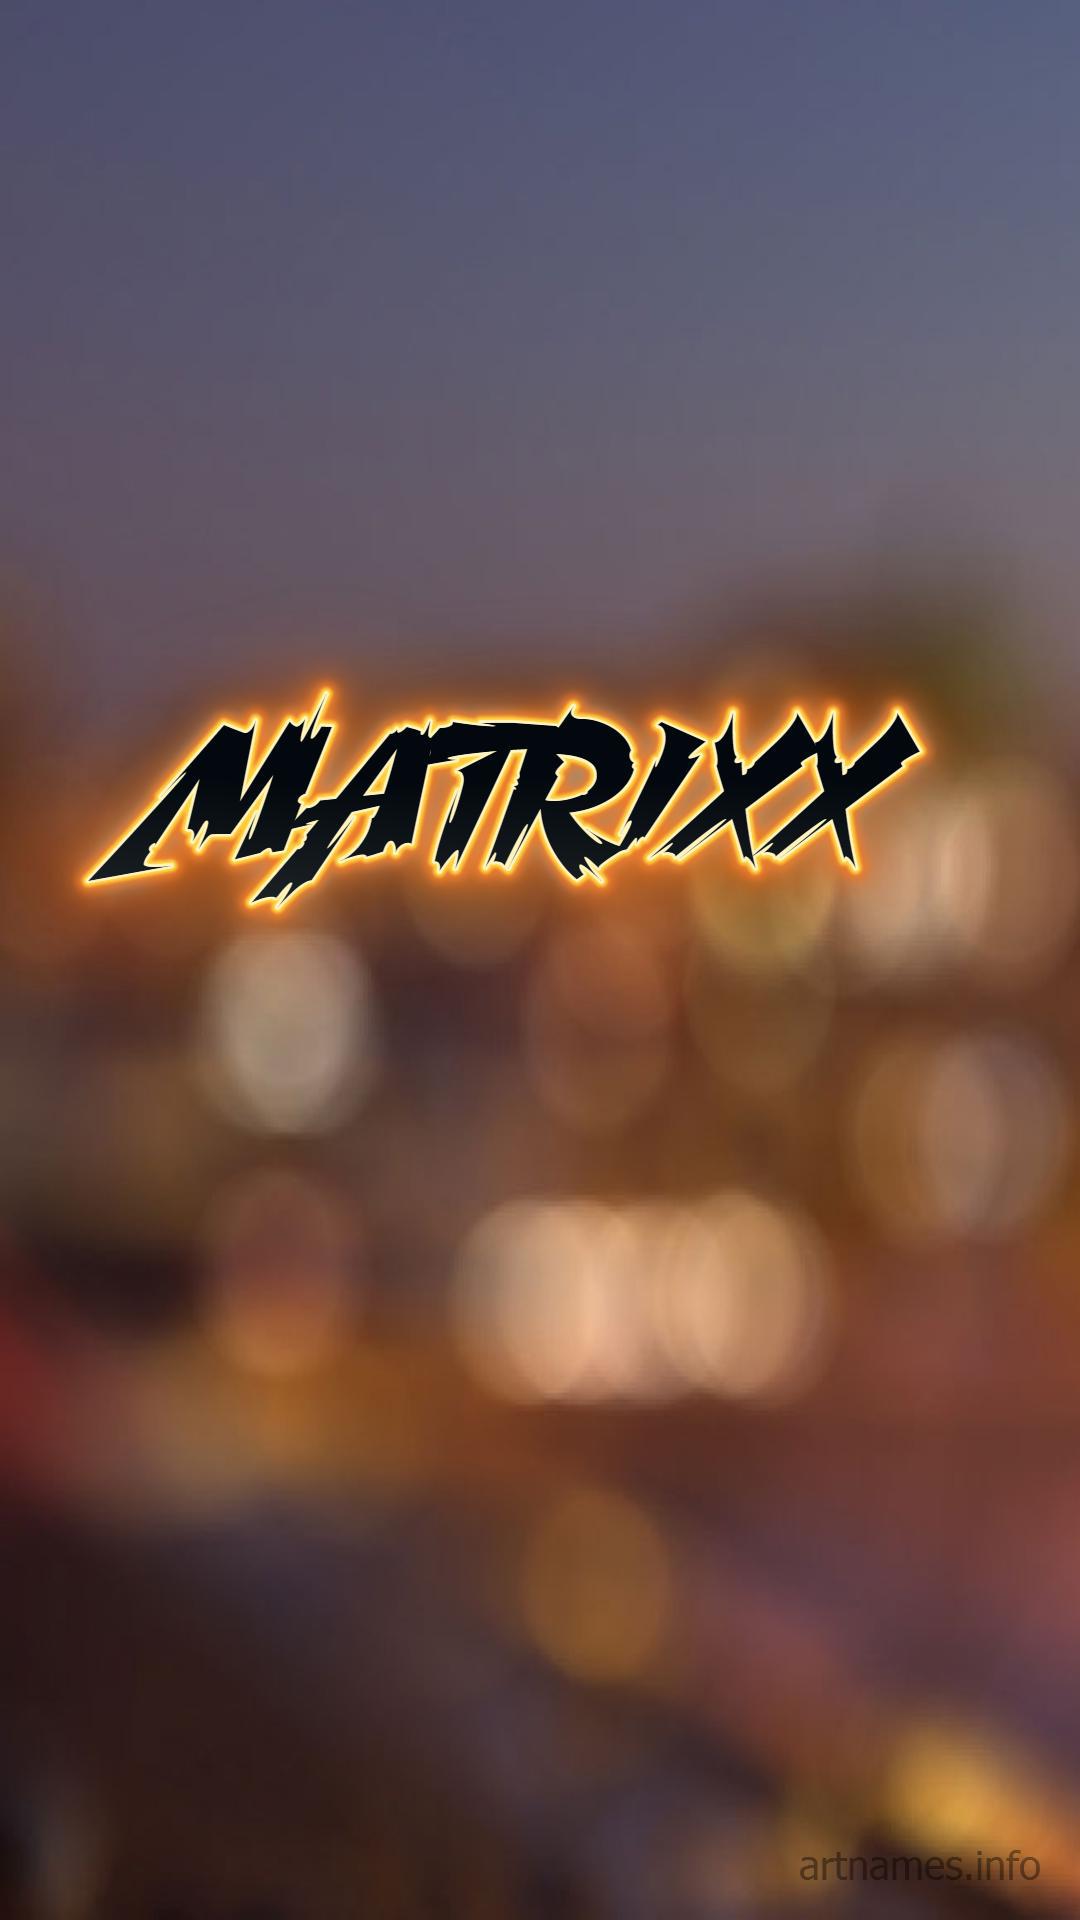 The Matrixx Wallpapers